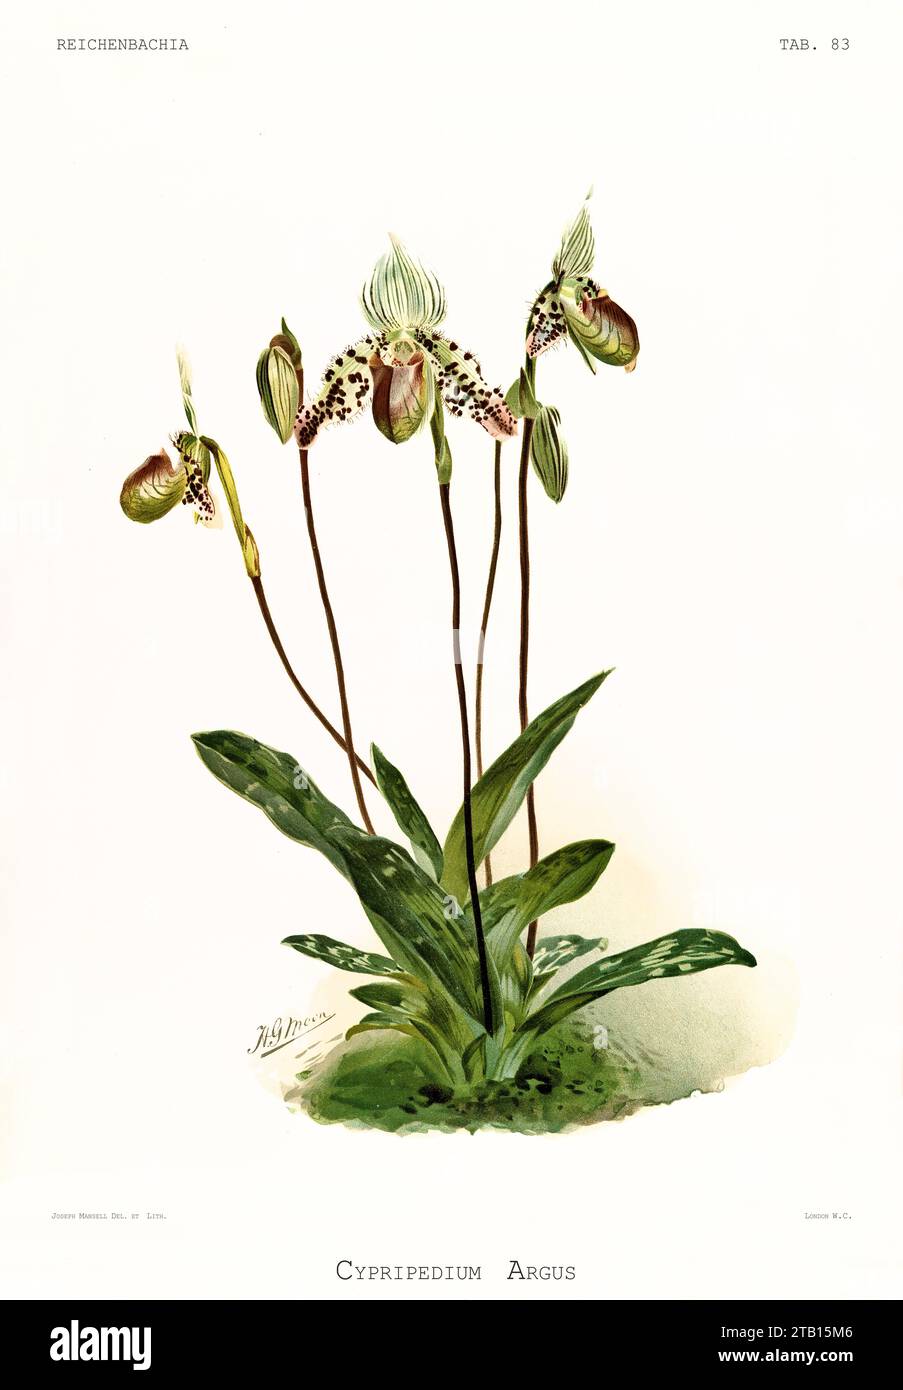 Old illustration of  Paphiopedilum argus. Reichenbachia, by F. Sander. St. Albans, UK, 1888 - 1894 Stock Photo